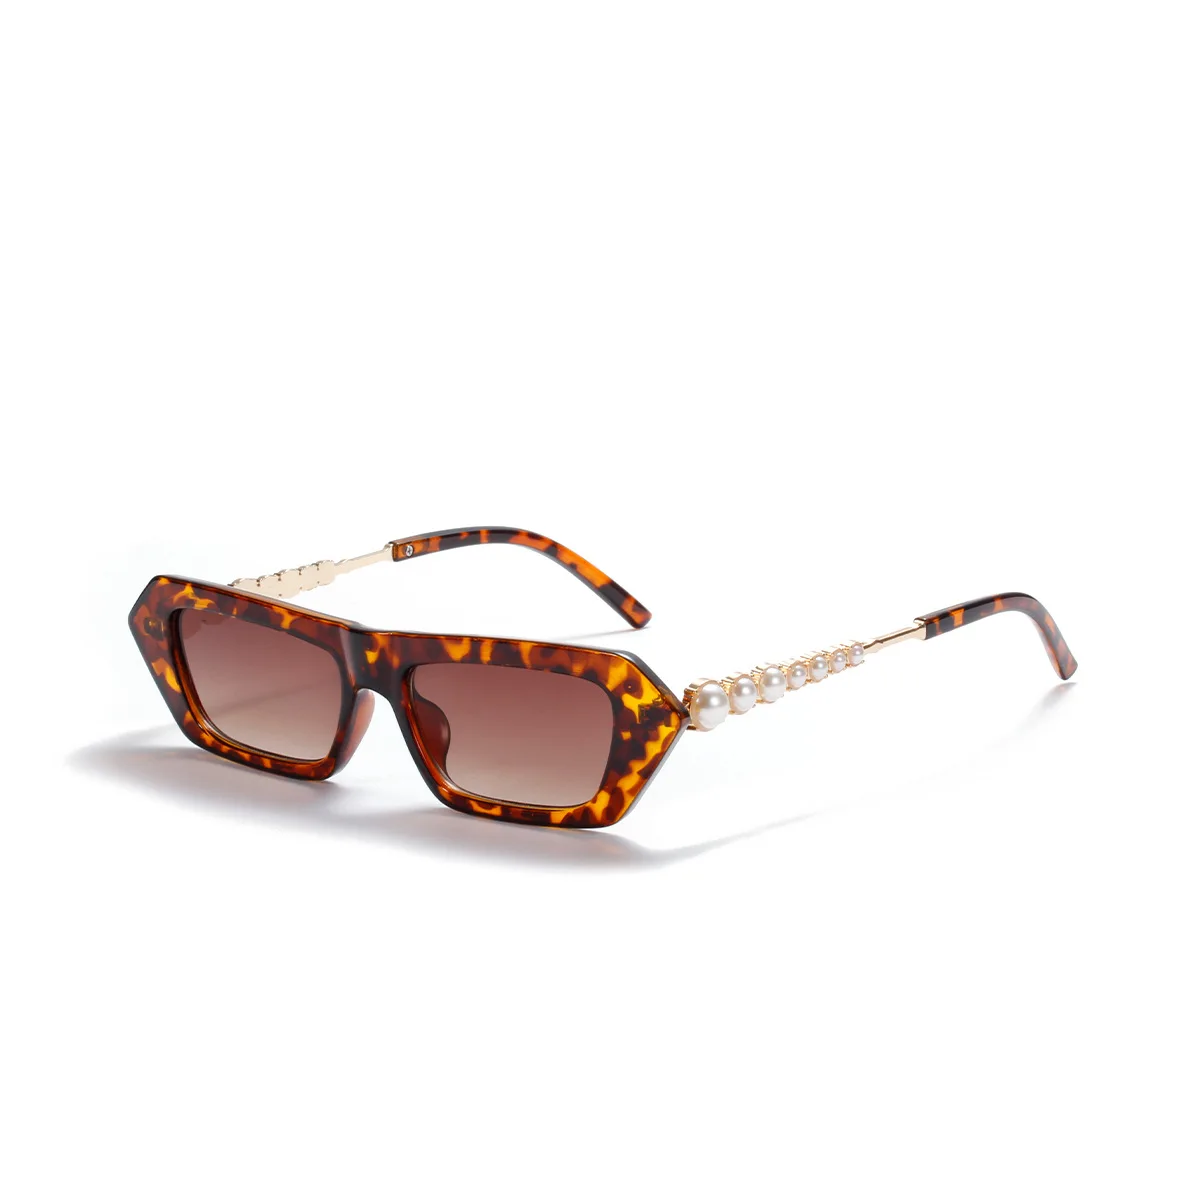 

JOSEEN 2021 Pearl Square Luxury Metal PC Acetate Frame Sunglasses Men Women Fashion Shades UV400 Vintage Glasses